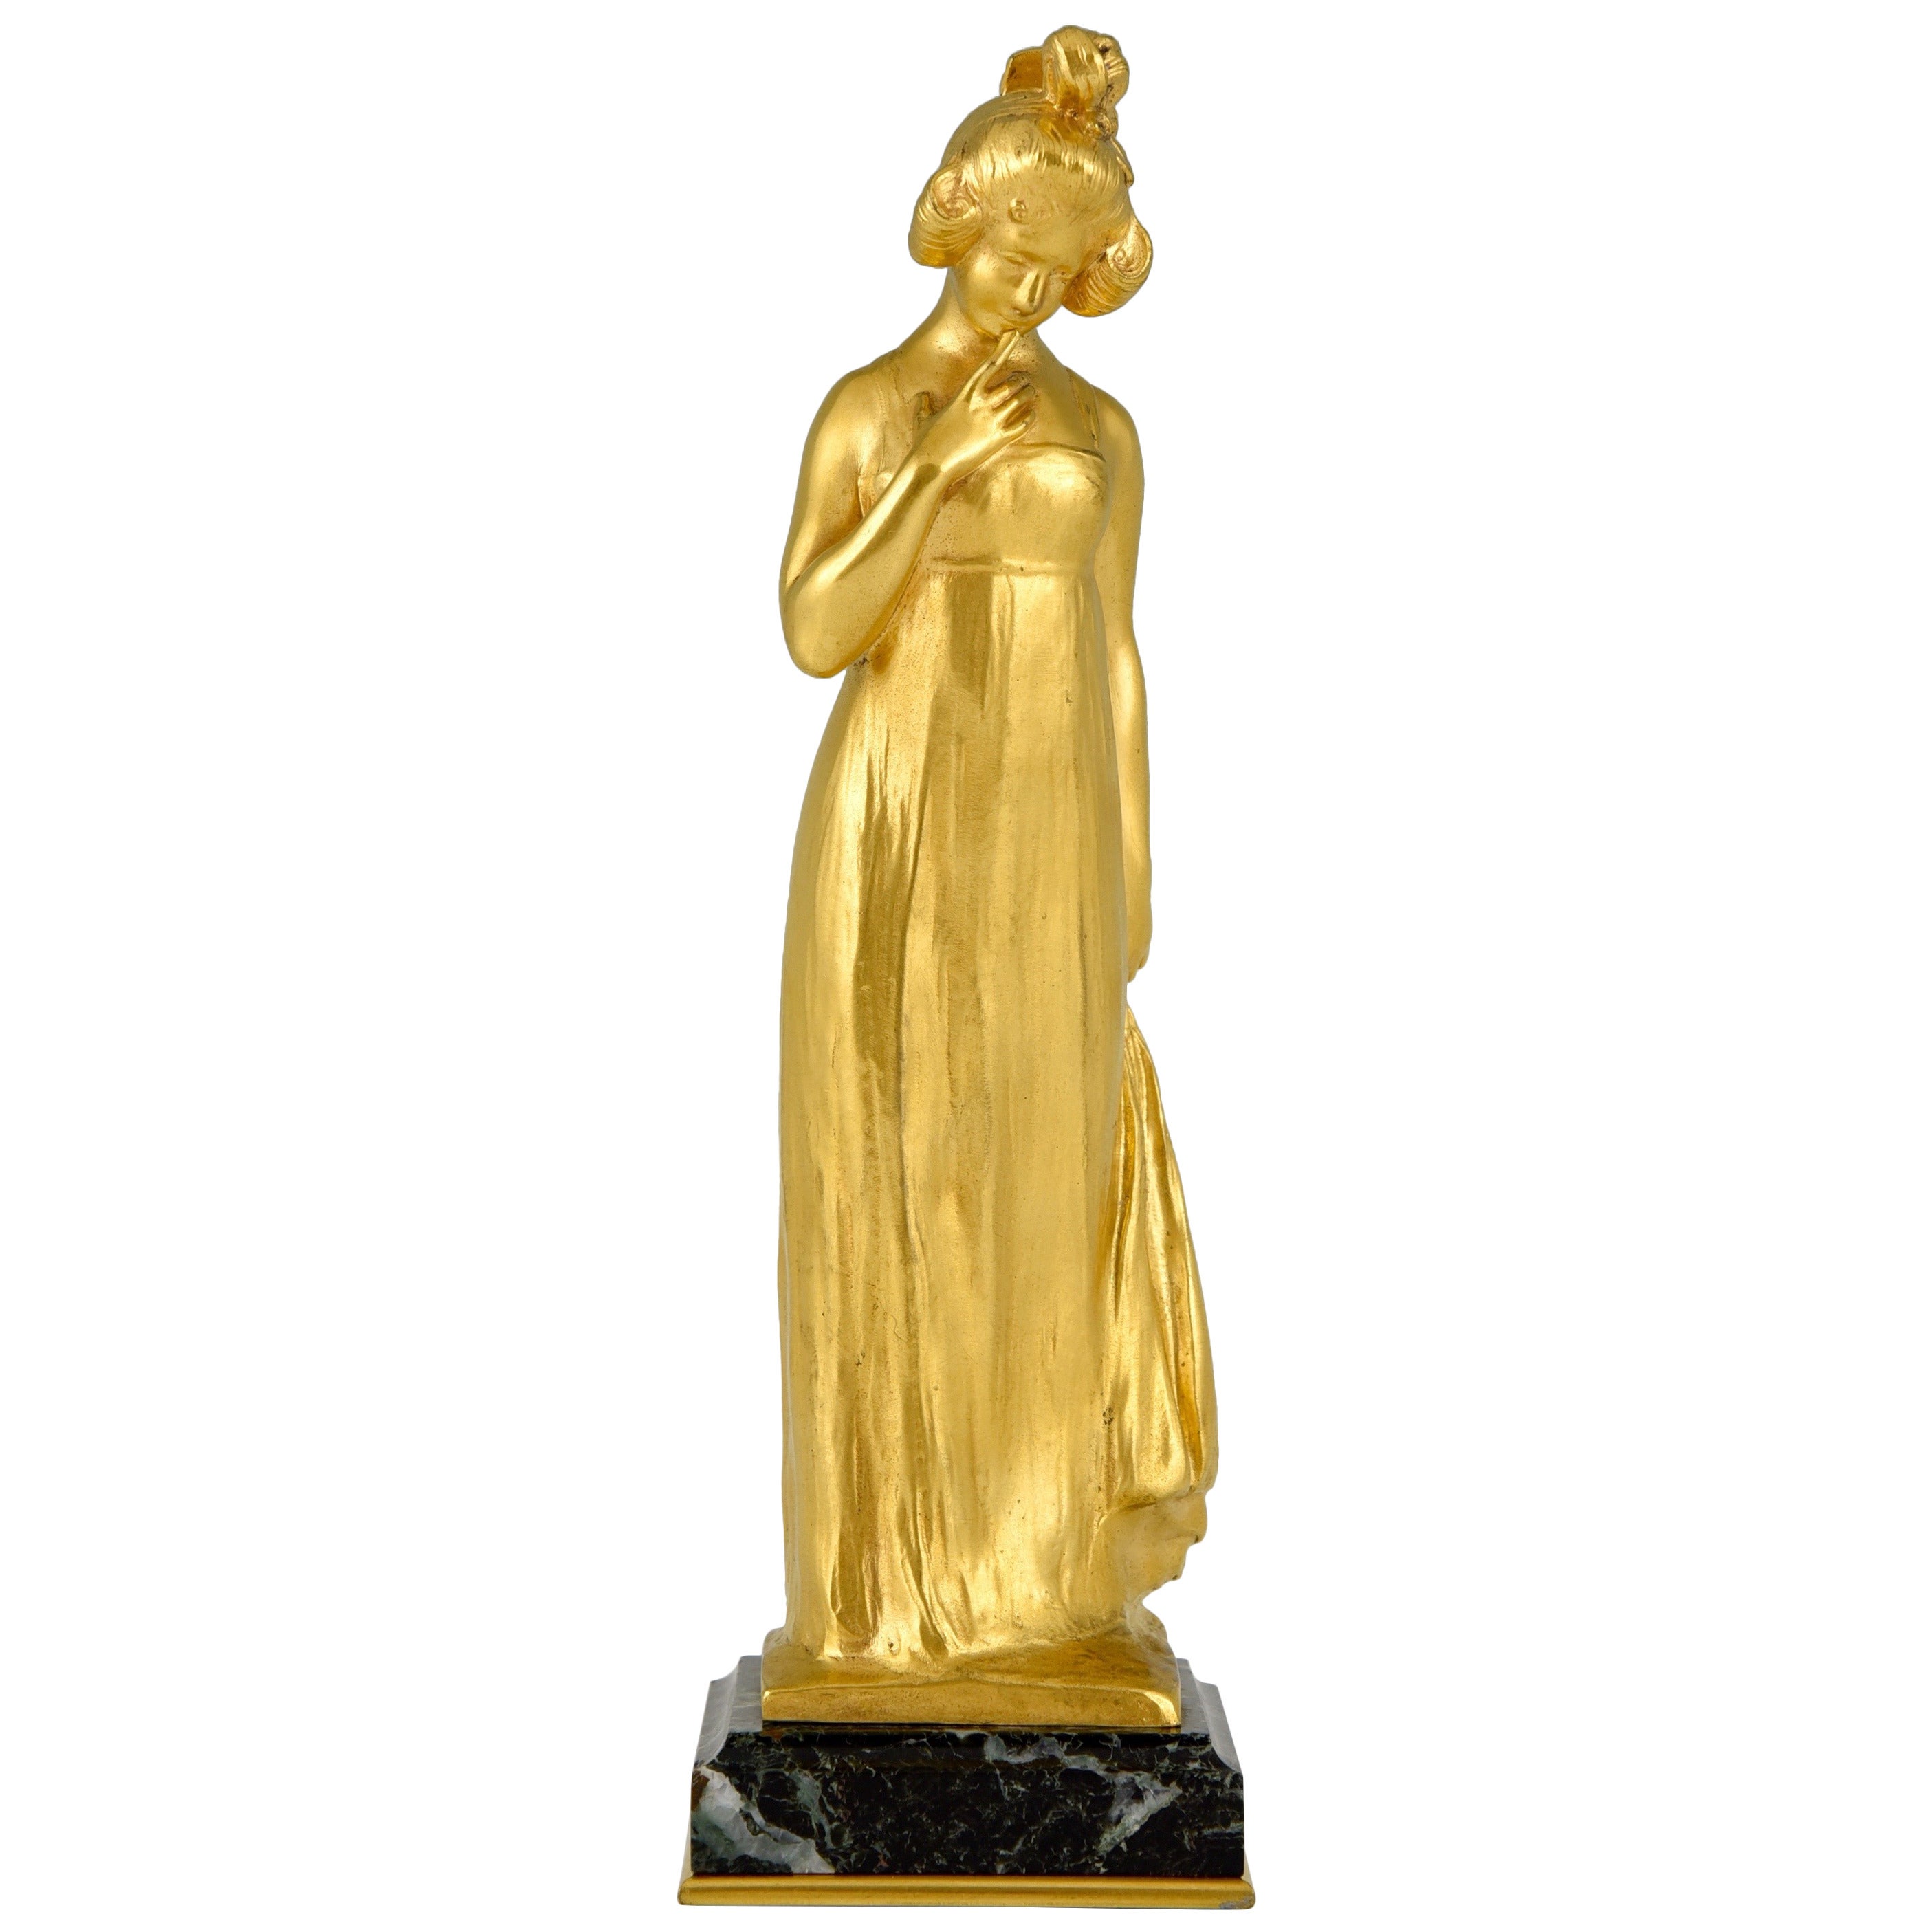 French Art Nouveau Gilt Bronze Sculpture of a Lady by Laporte-Blairsy, 1905